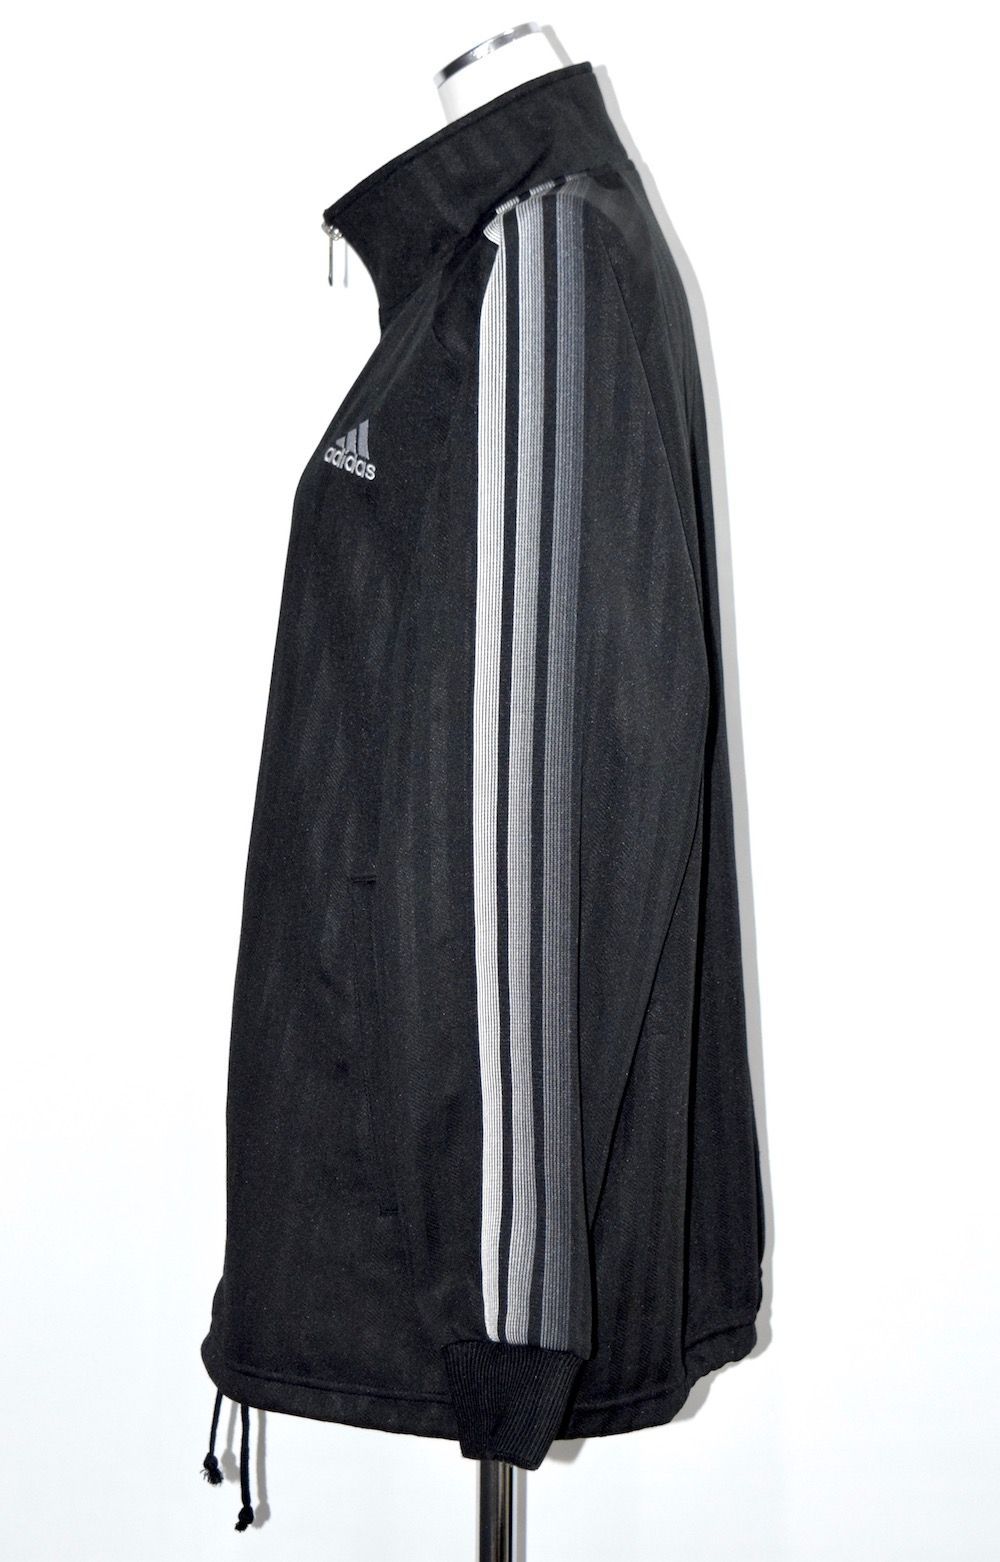 Adidas/England 3line track jacket